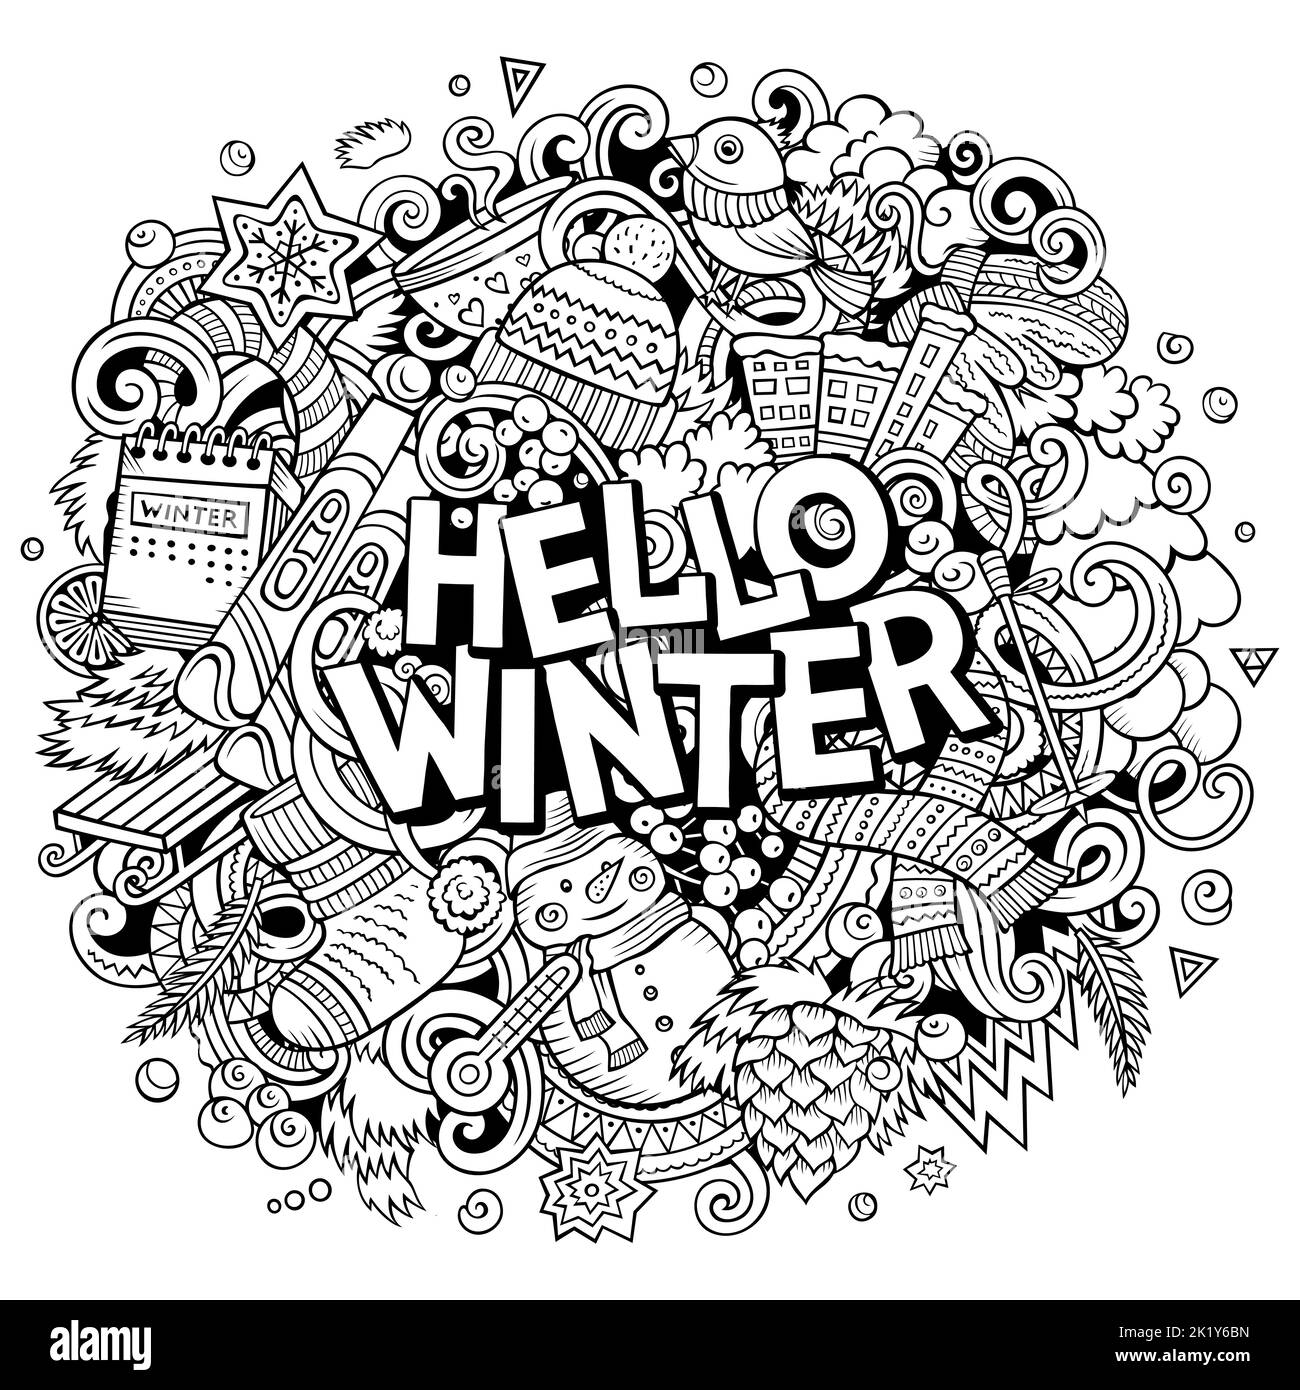 Hello Winter handgezeichnete Doodles Vektorgrafik. Stock Vektor